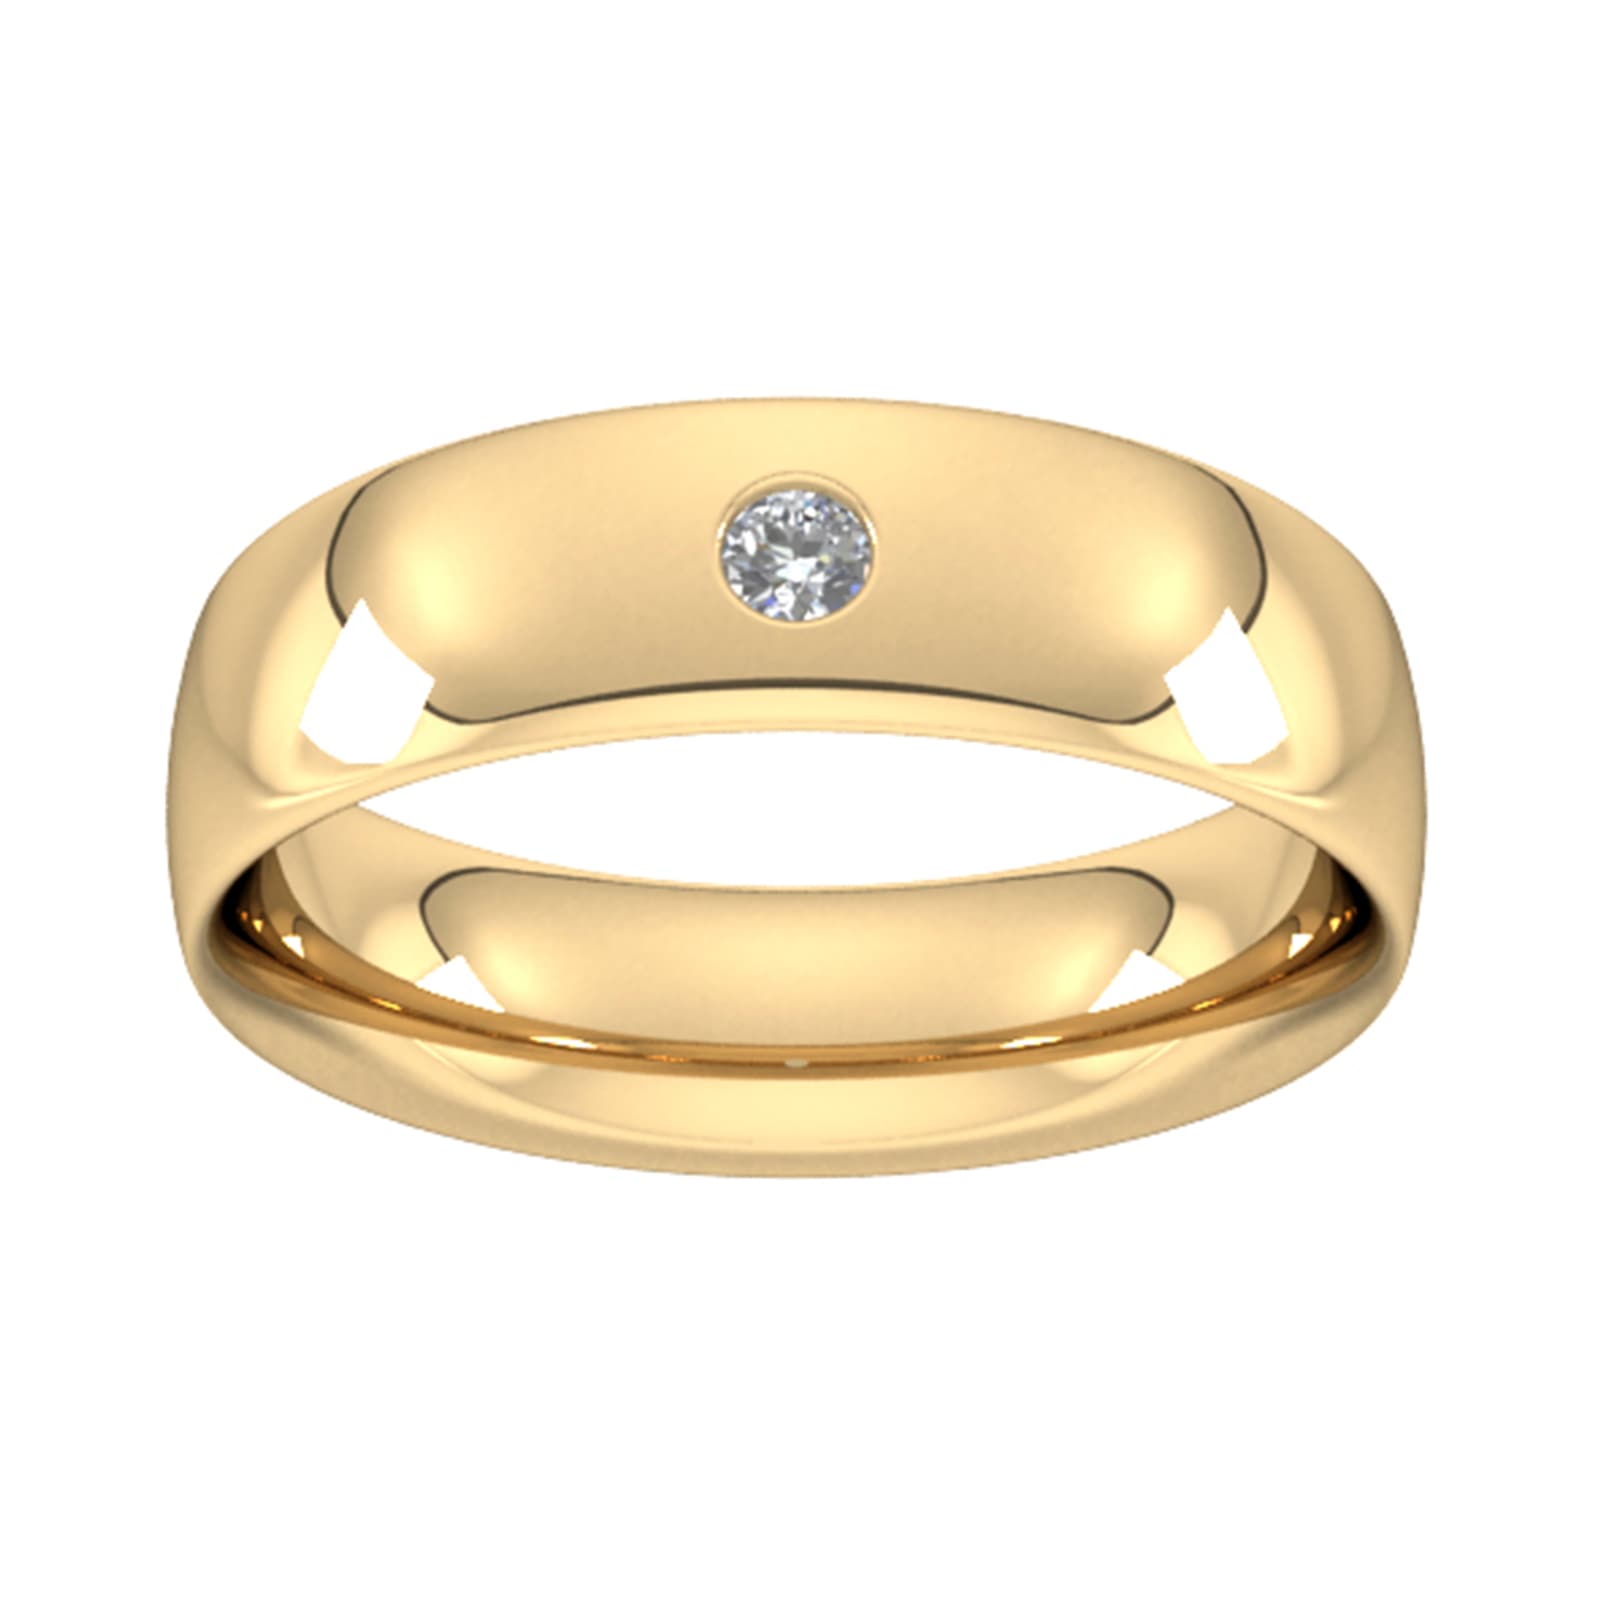 6mm Brilliant Cut Diamond Set Wedding Ring In 9 Carat Yellow Gold - Ring Size K